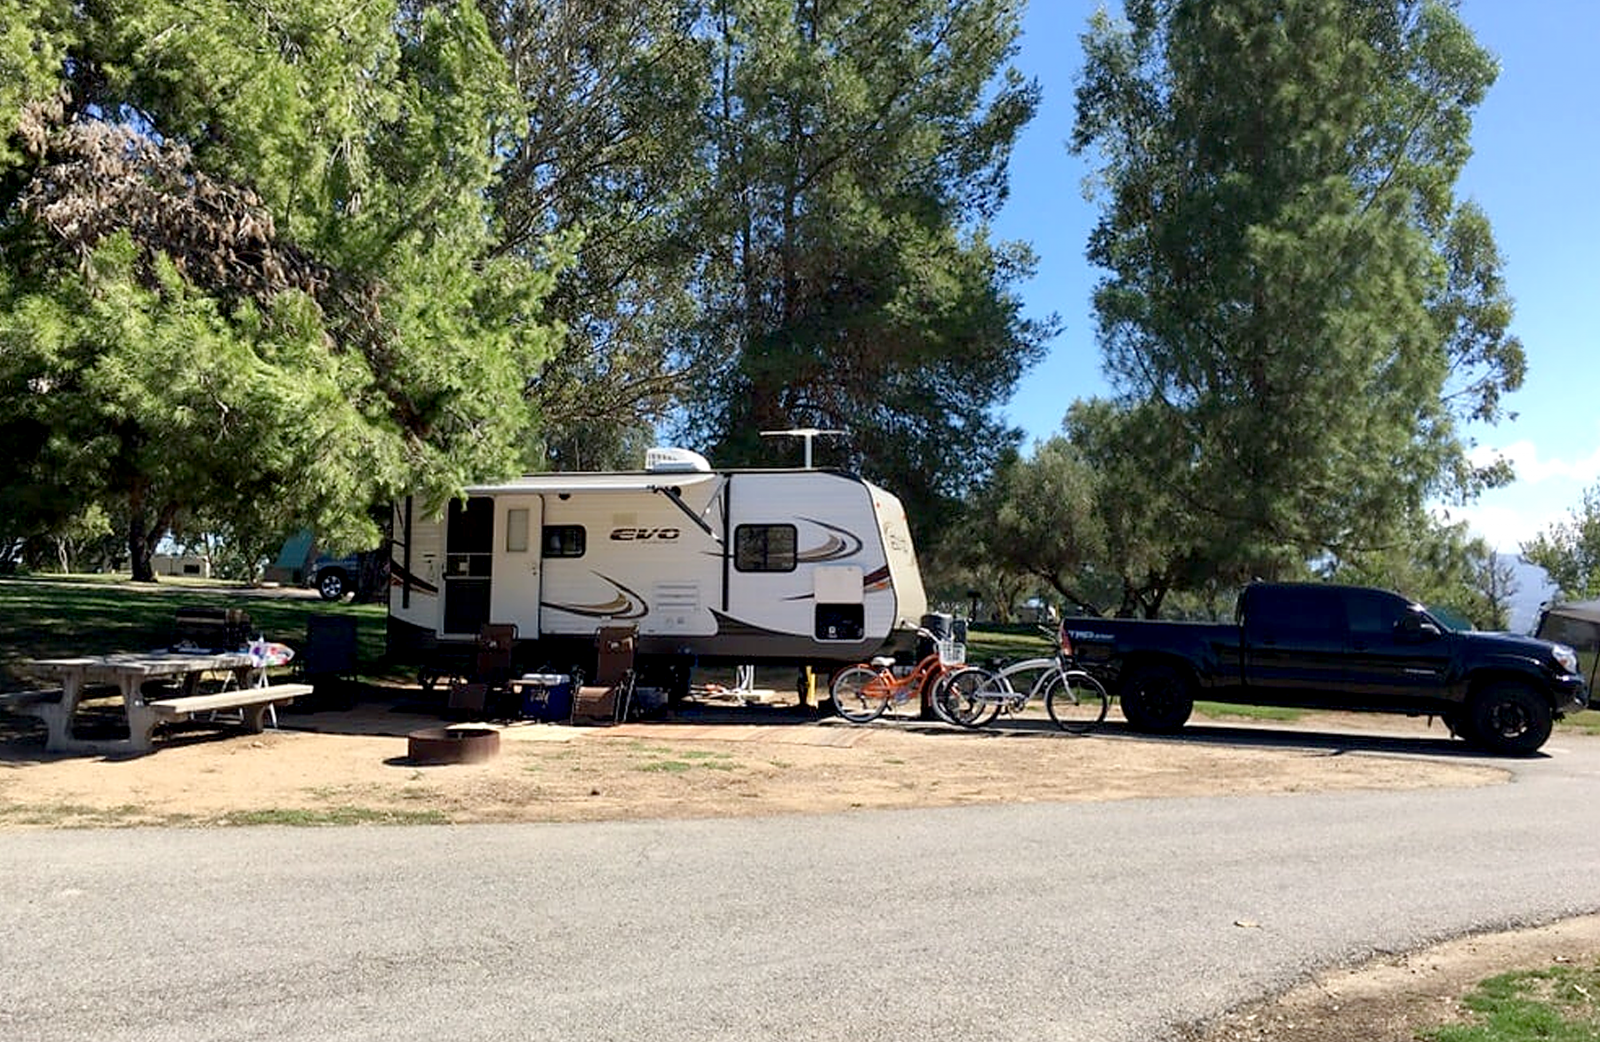 Prado RV camper parked under a tree.